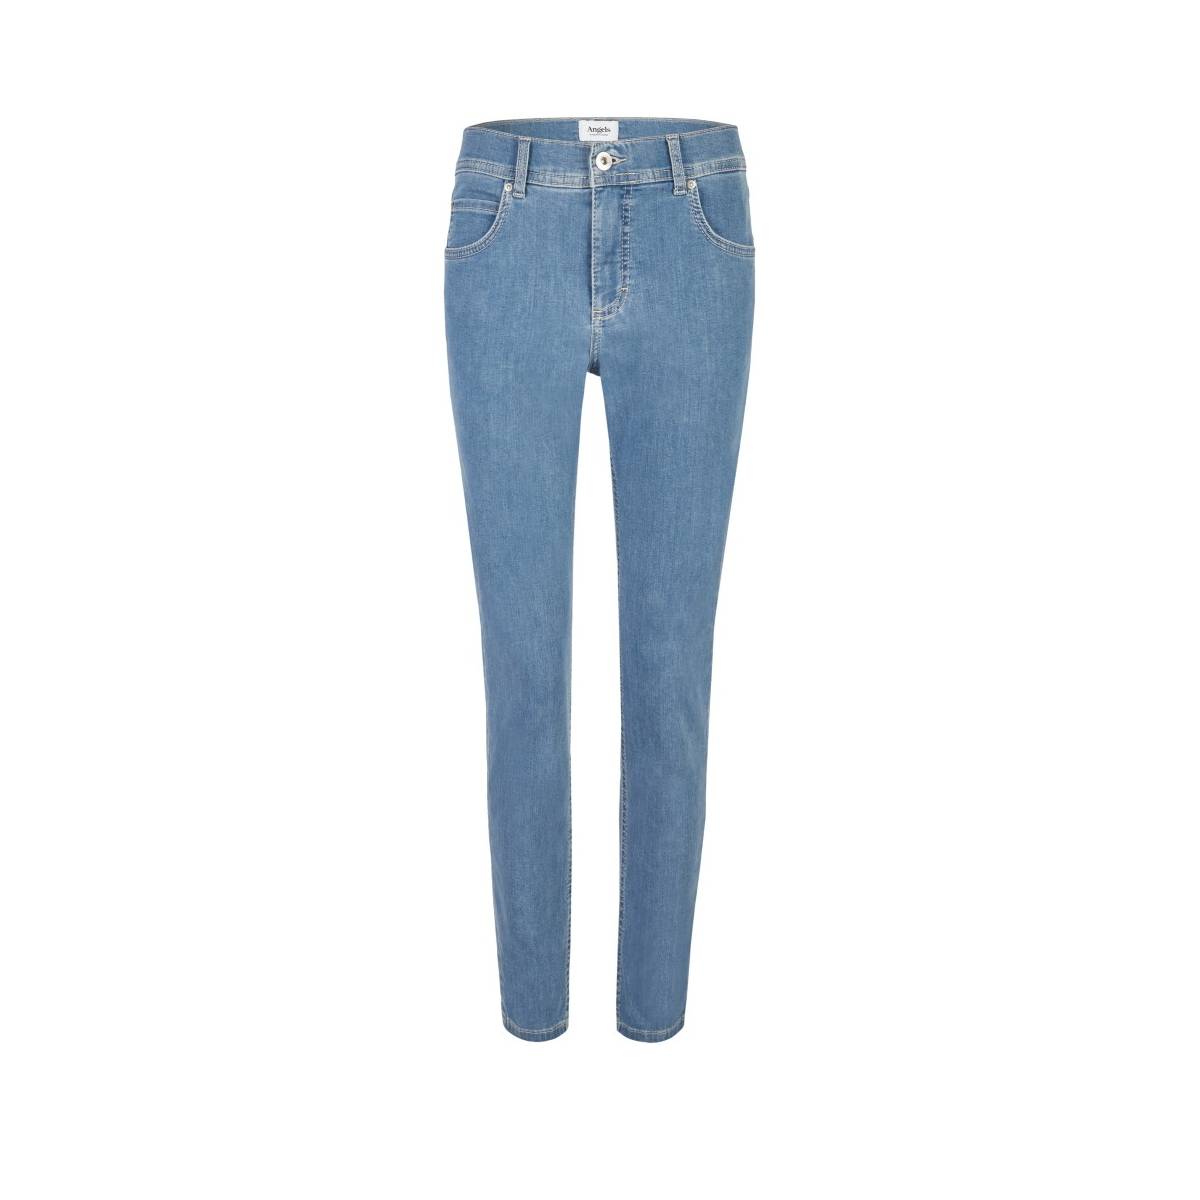 ANGELS  broeken lichte jeans -  model ornella/332680007 - Dameskleding broeken jeans